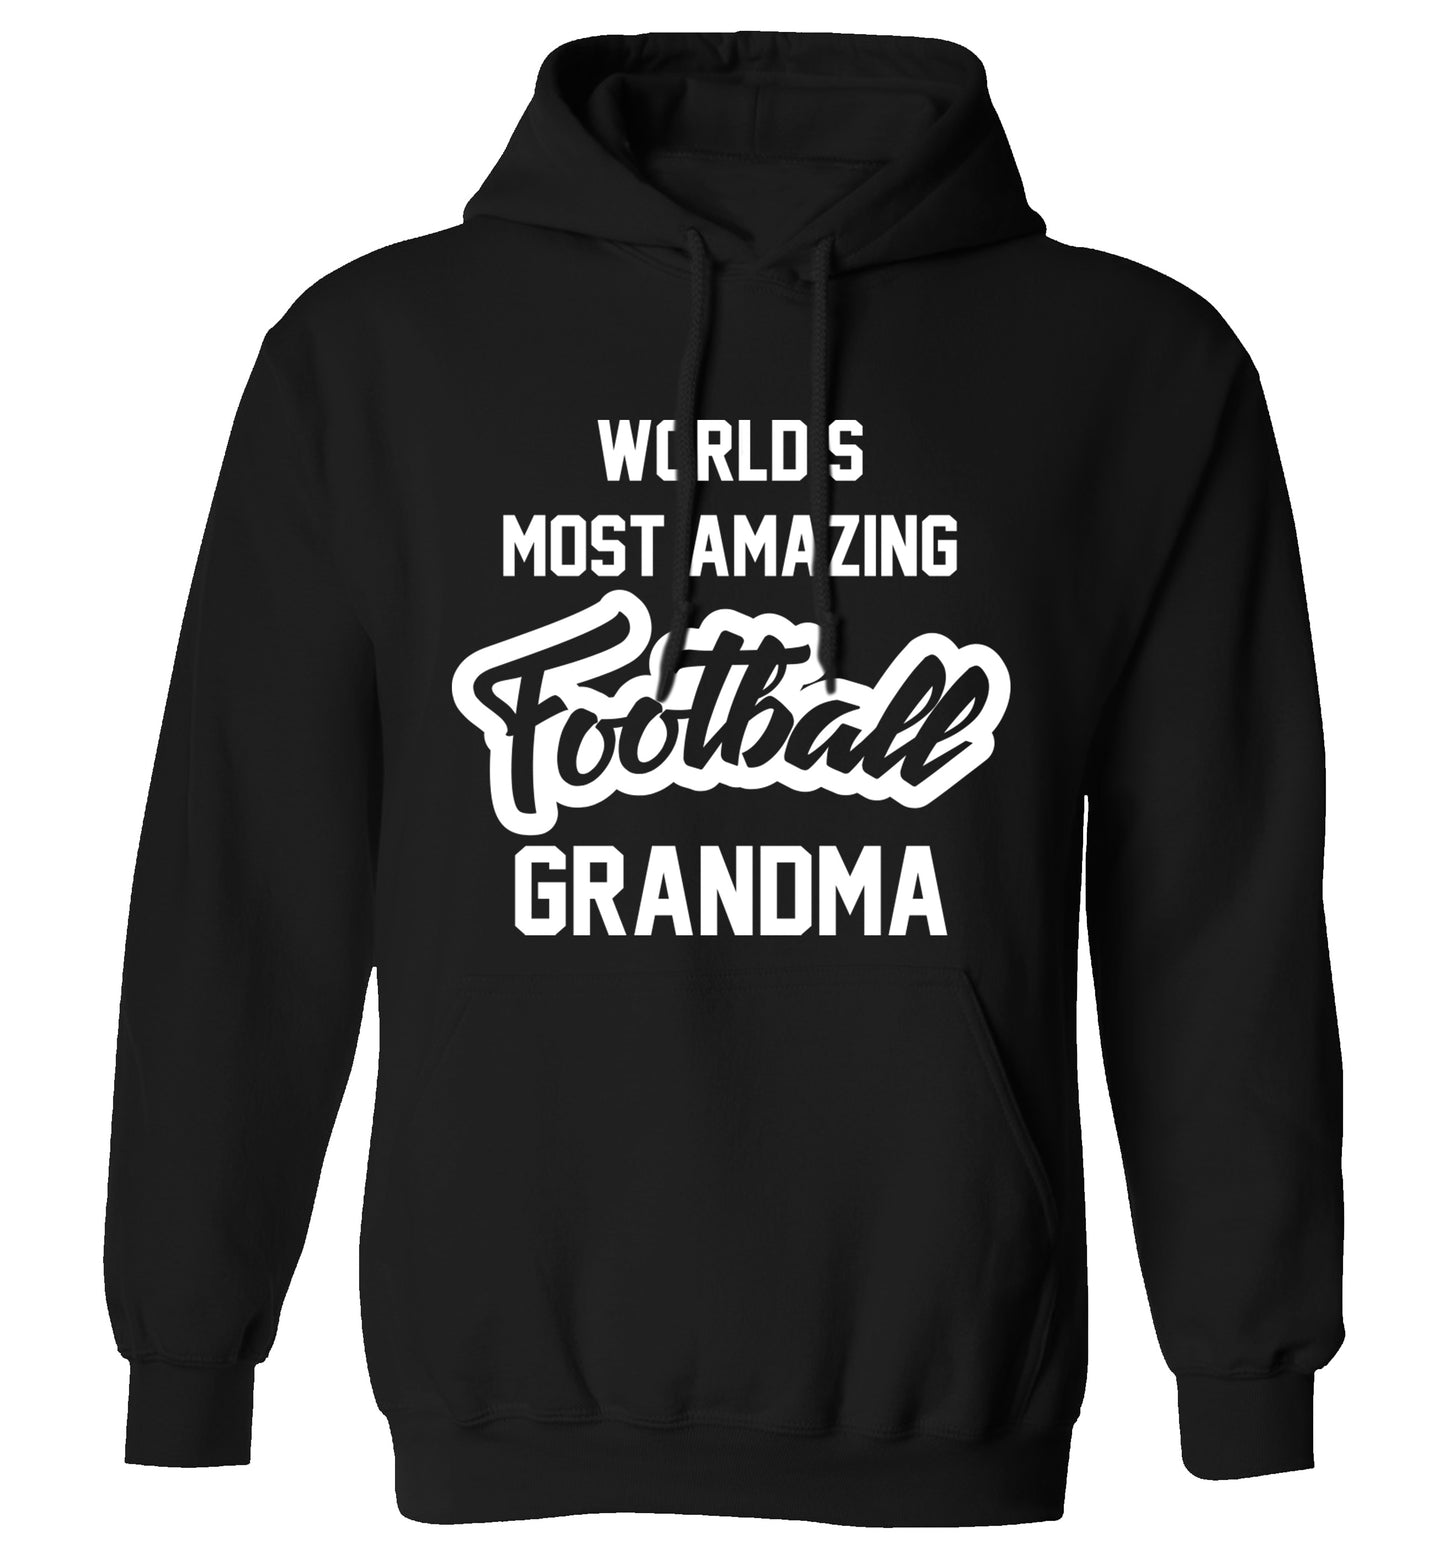 Worlds most amazing football grandma adults unisexblack hoodie 2XL